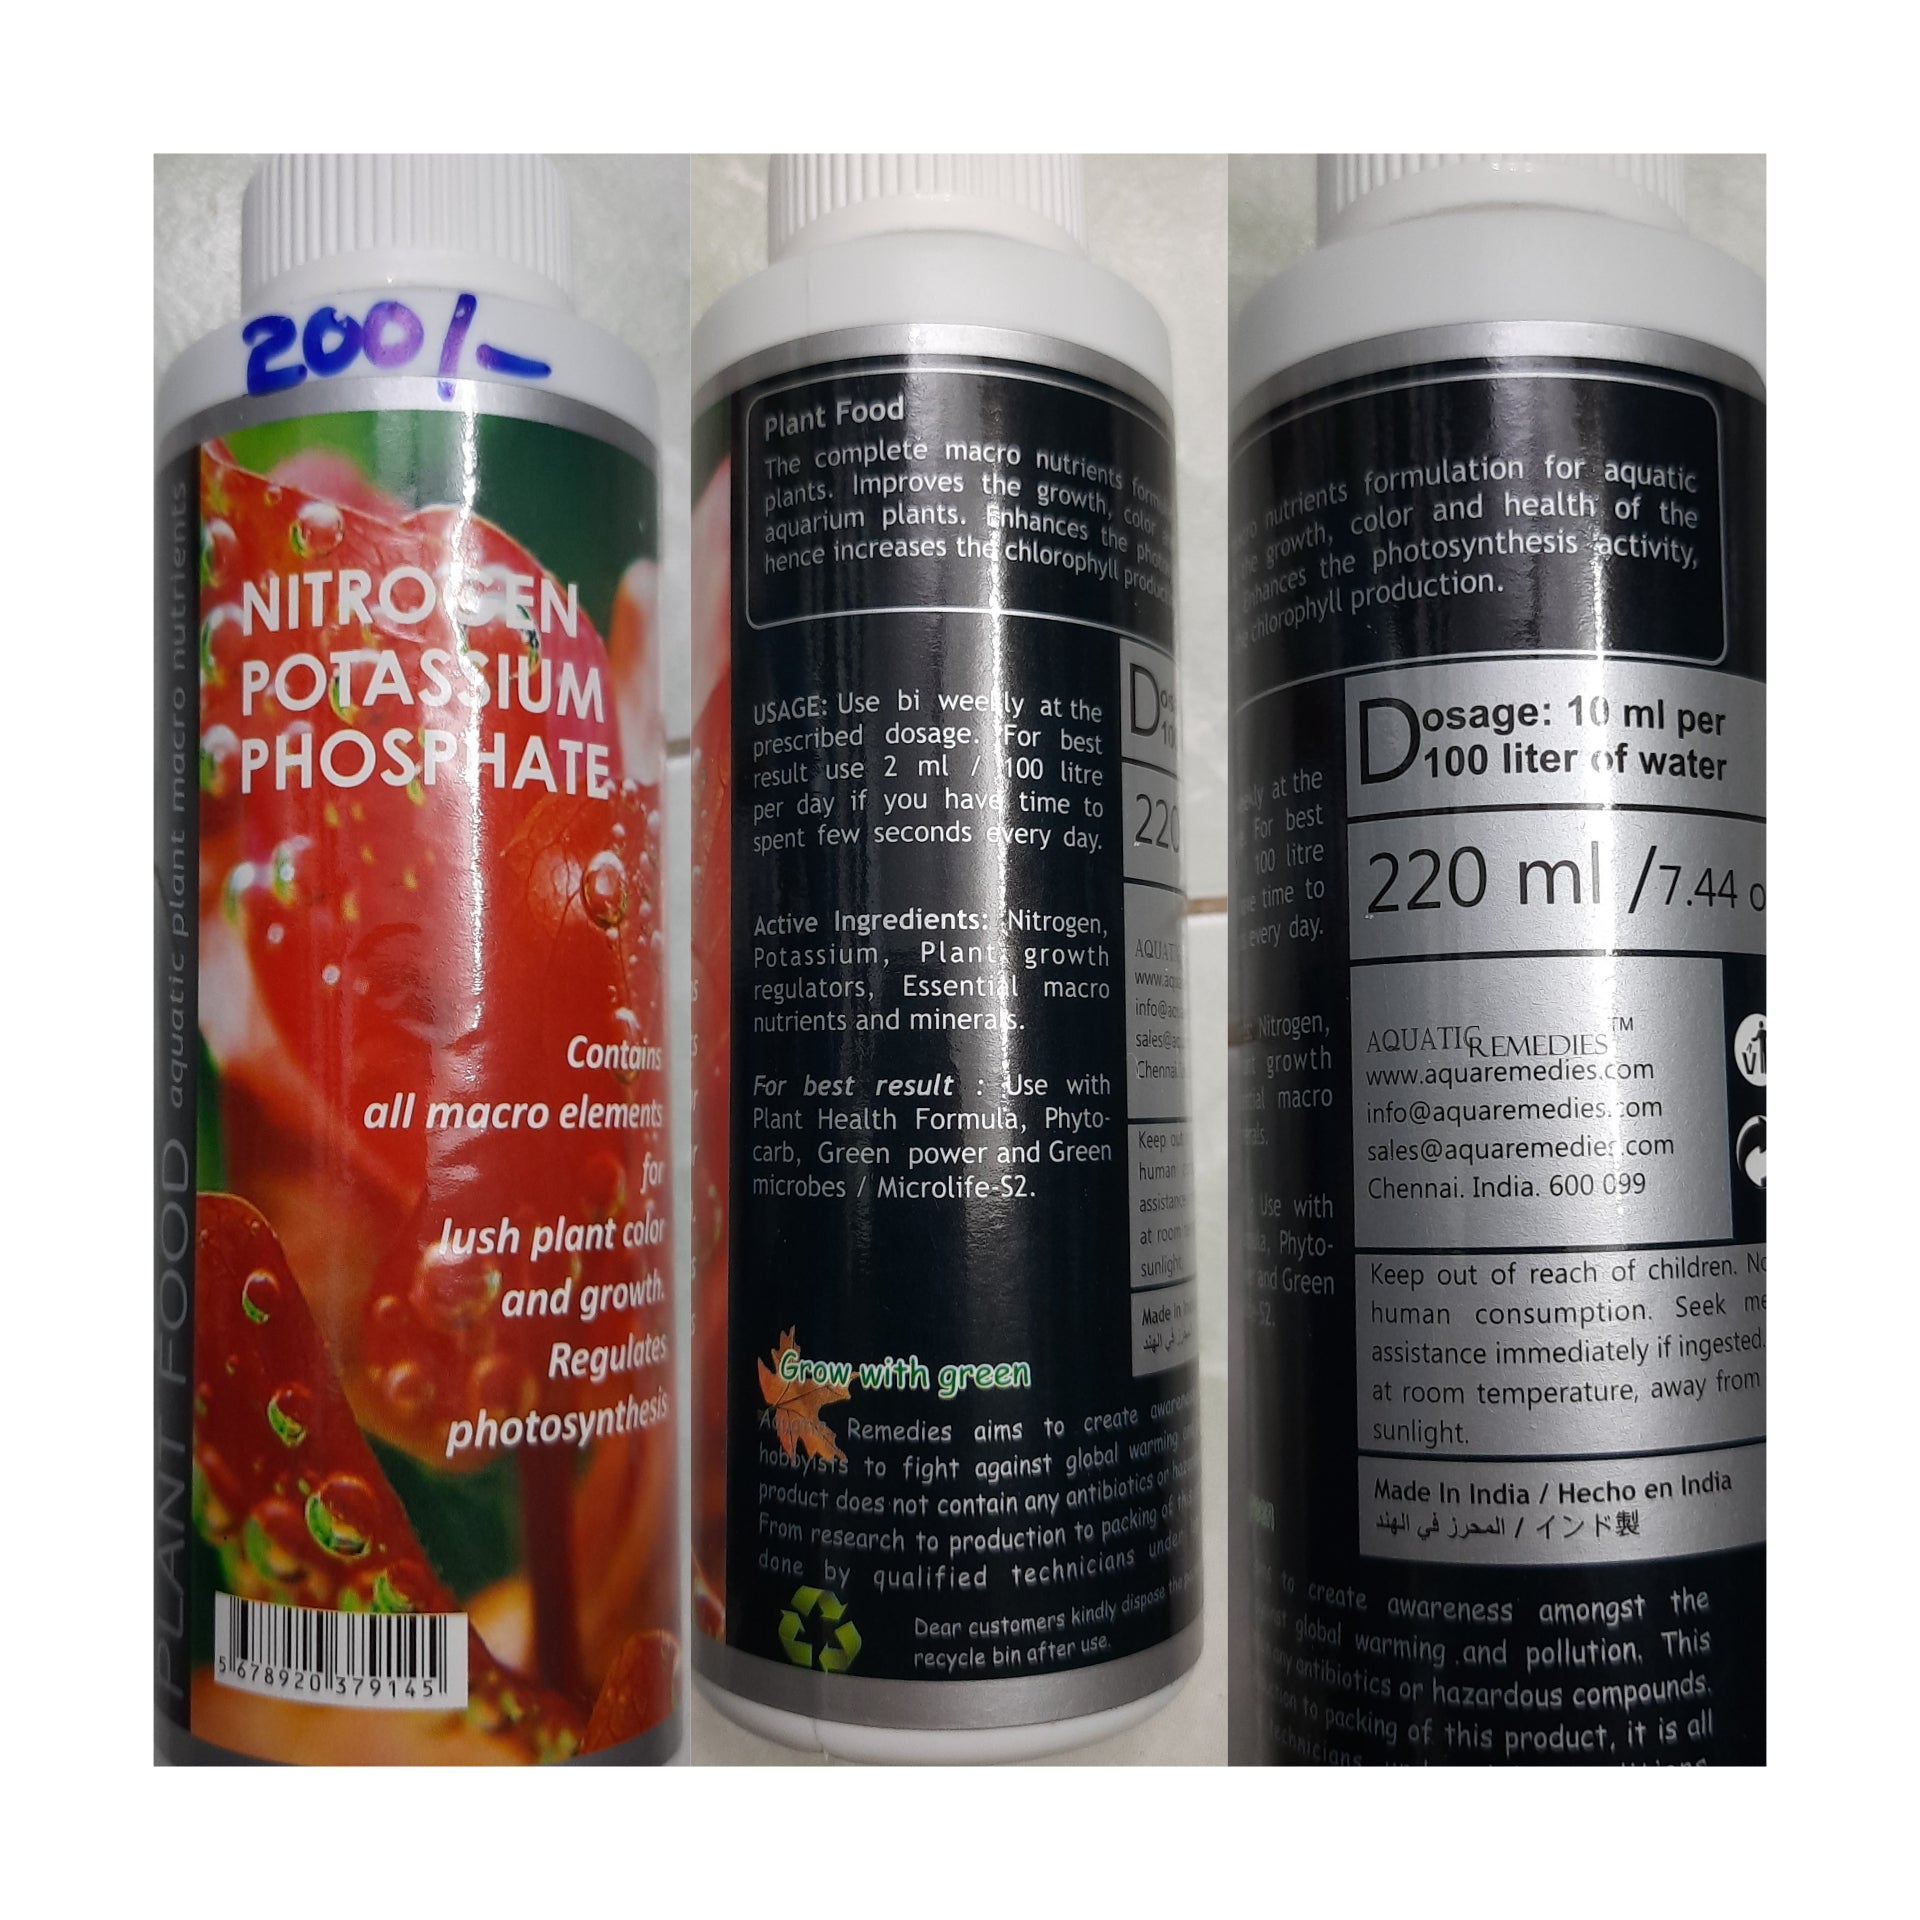 PLANT FOOD (Nitrogen Potassium Phosphate) 220 ml - Aquatic Remedies